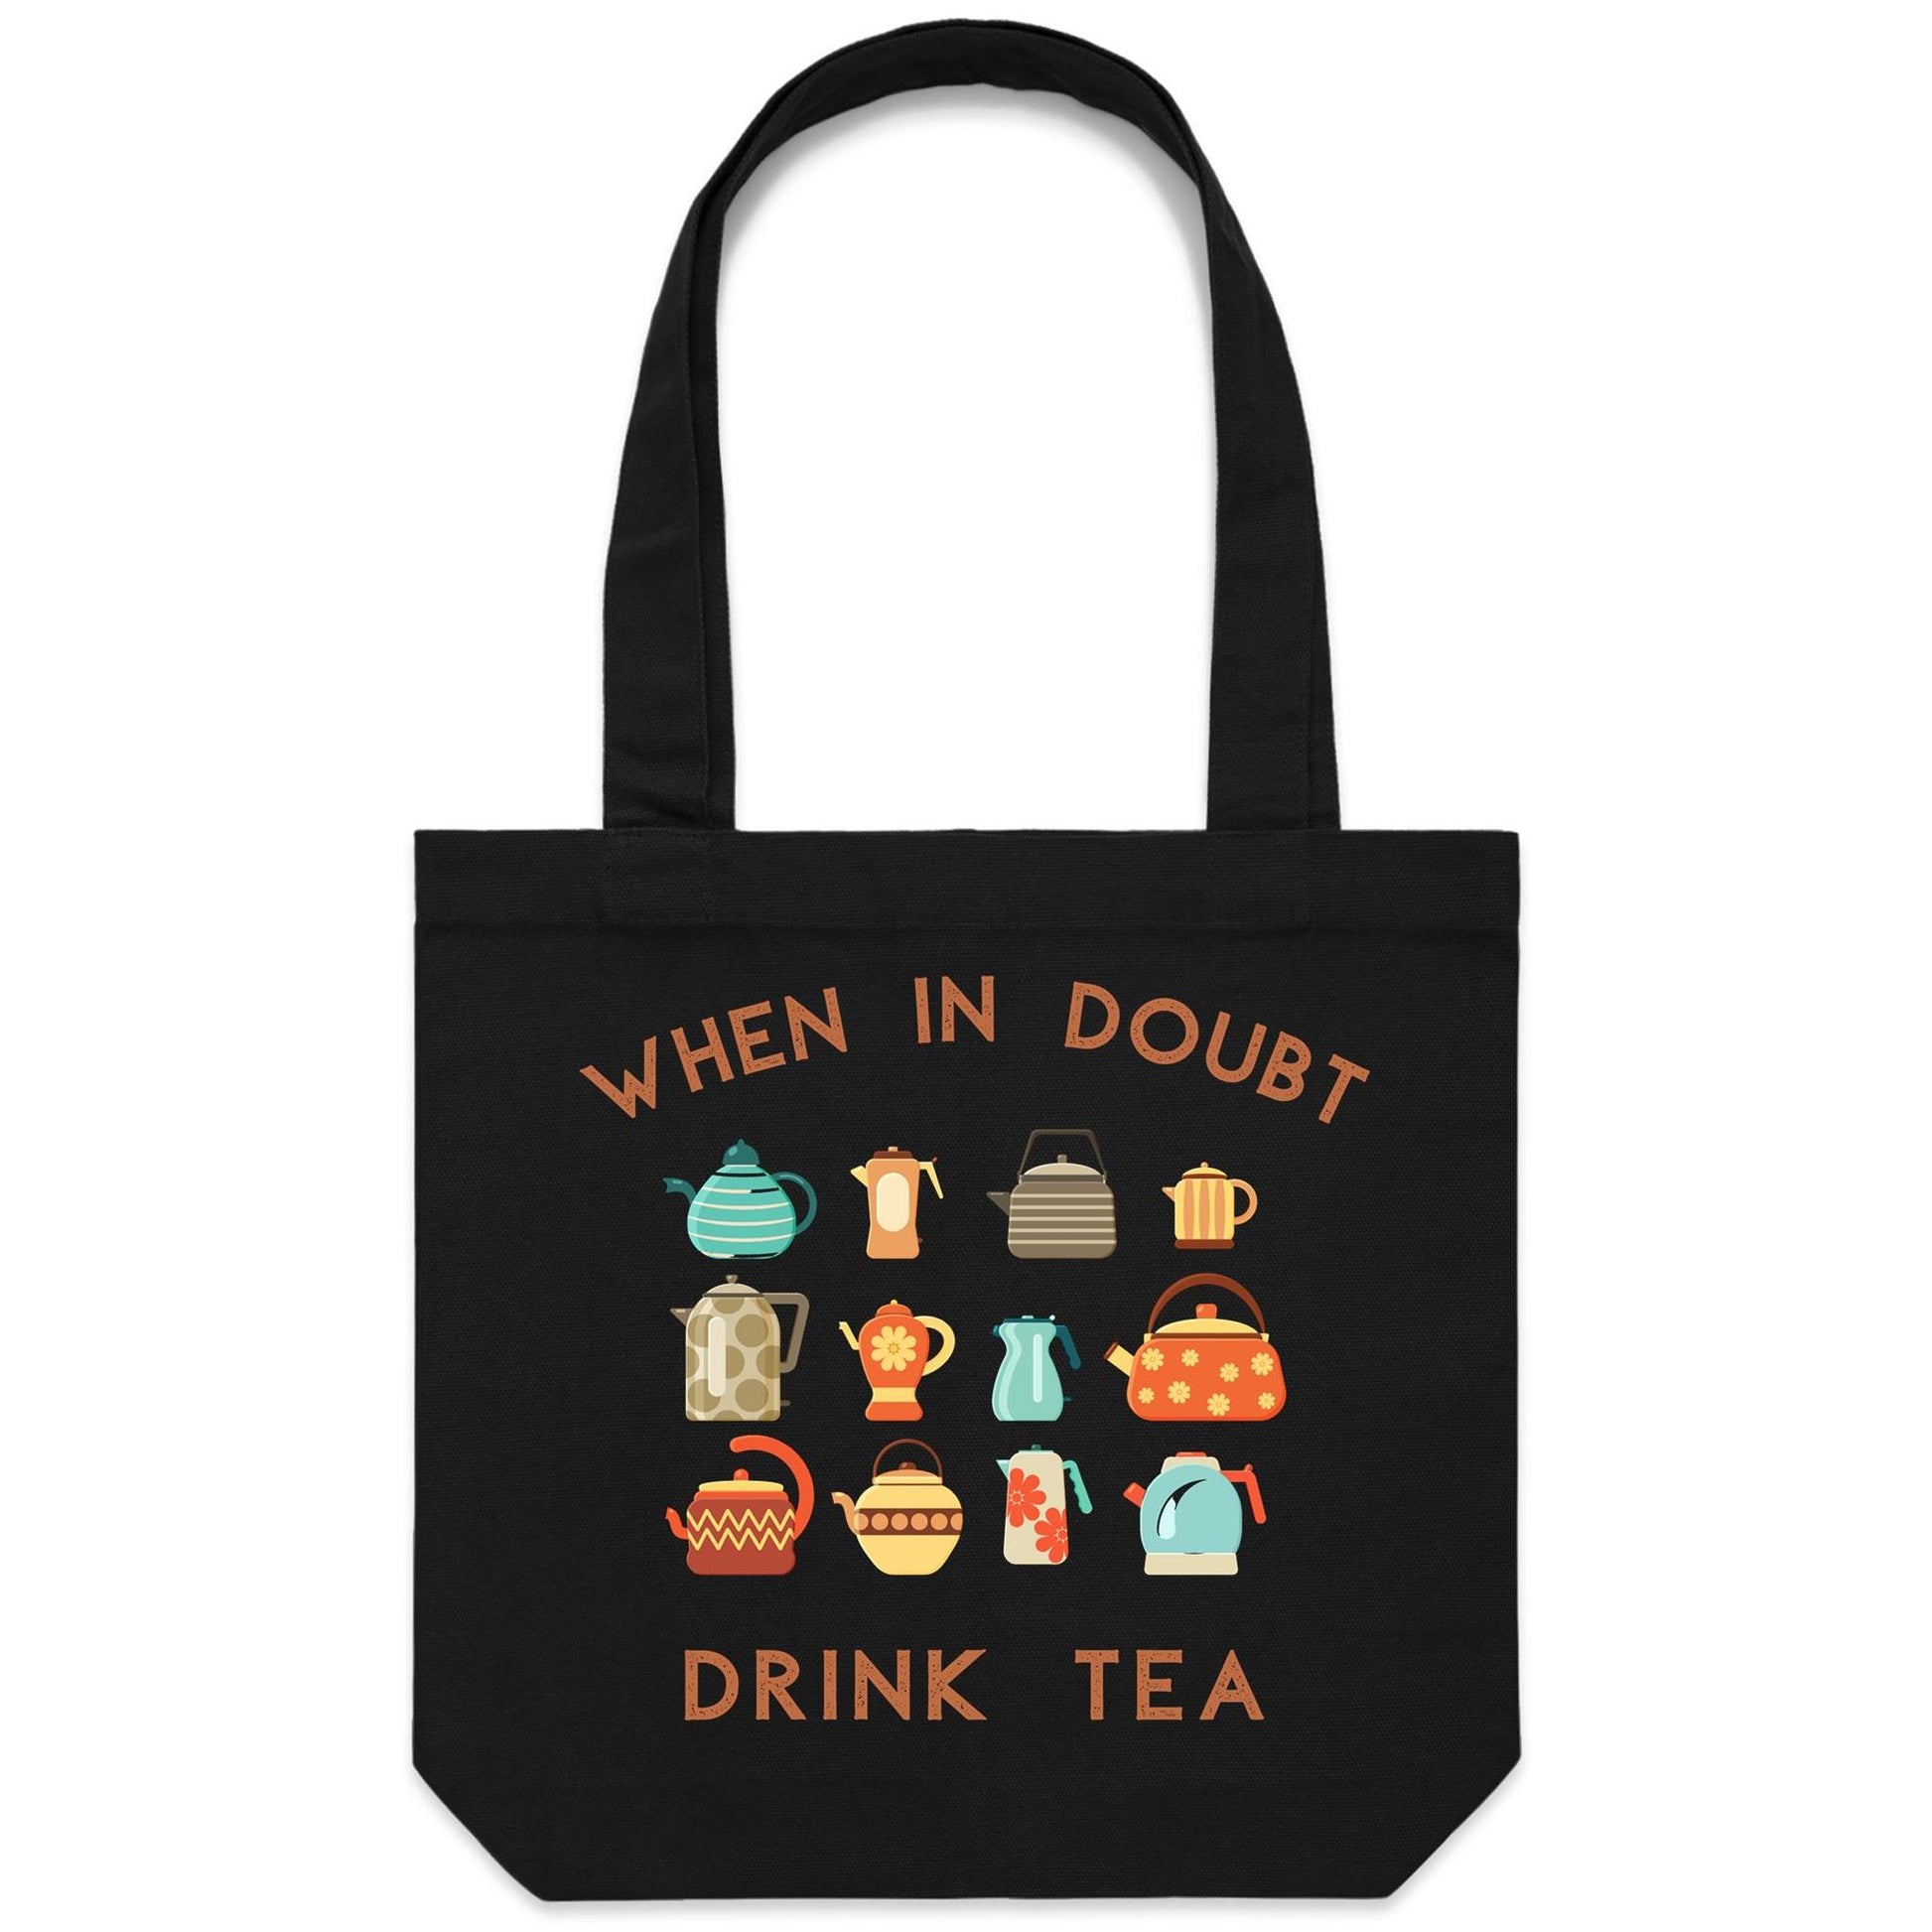 Drink Tea - Canvas Tote Bag Black One-Size Tote Bag Tea